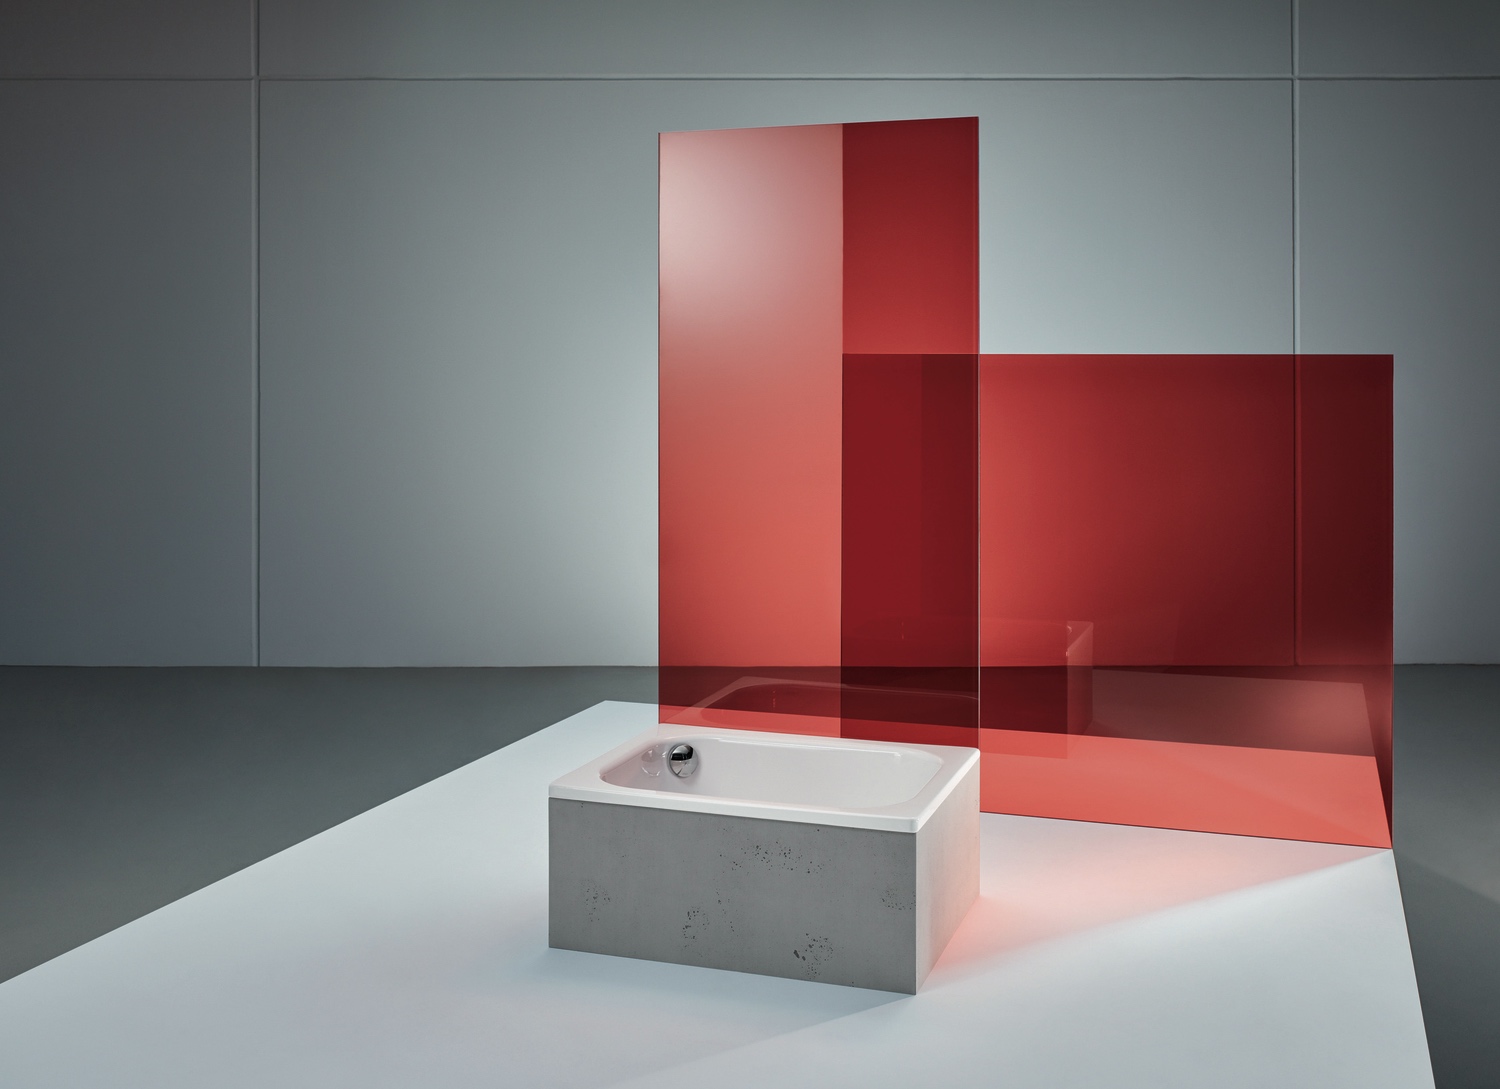 Bette quadrat Duschwanne „BetteDelta“ 100 × 100 cm in Weiß